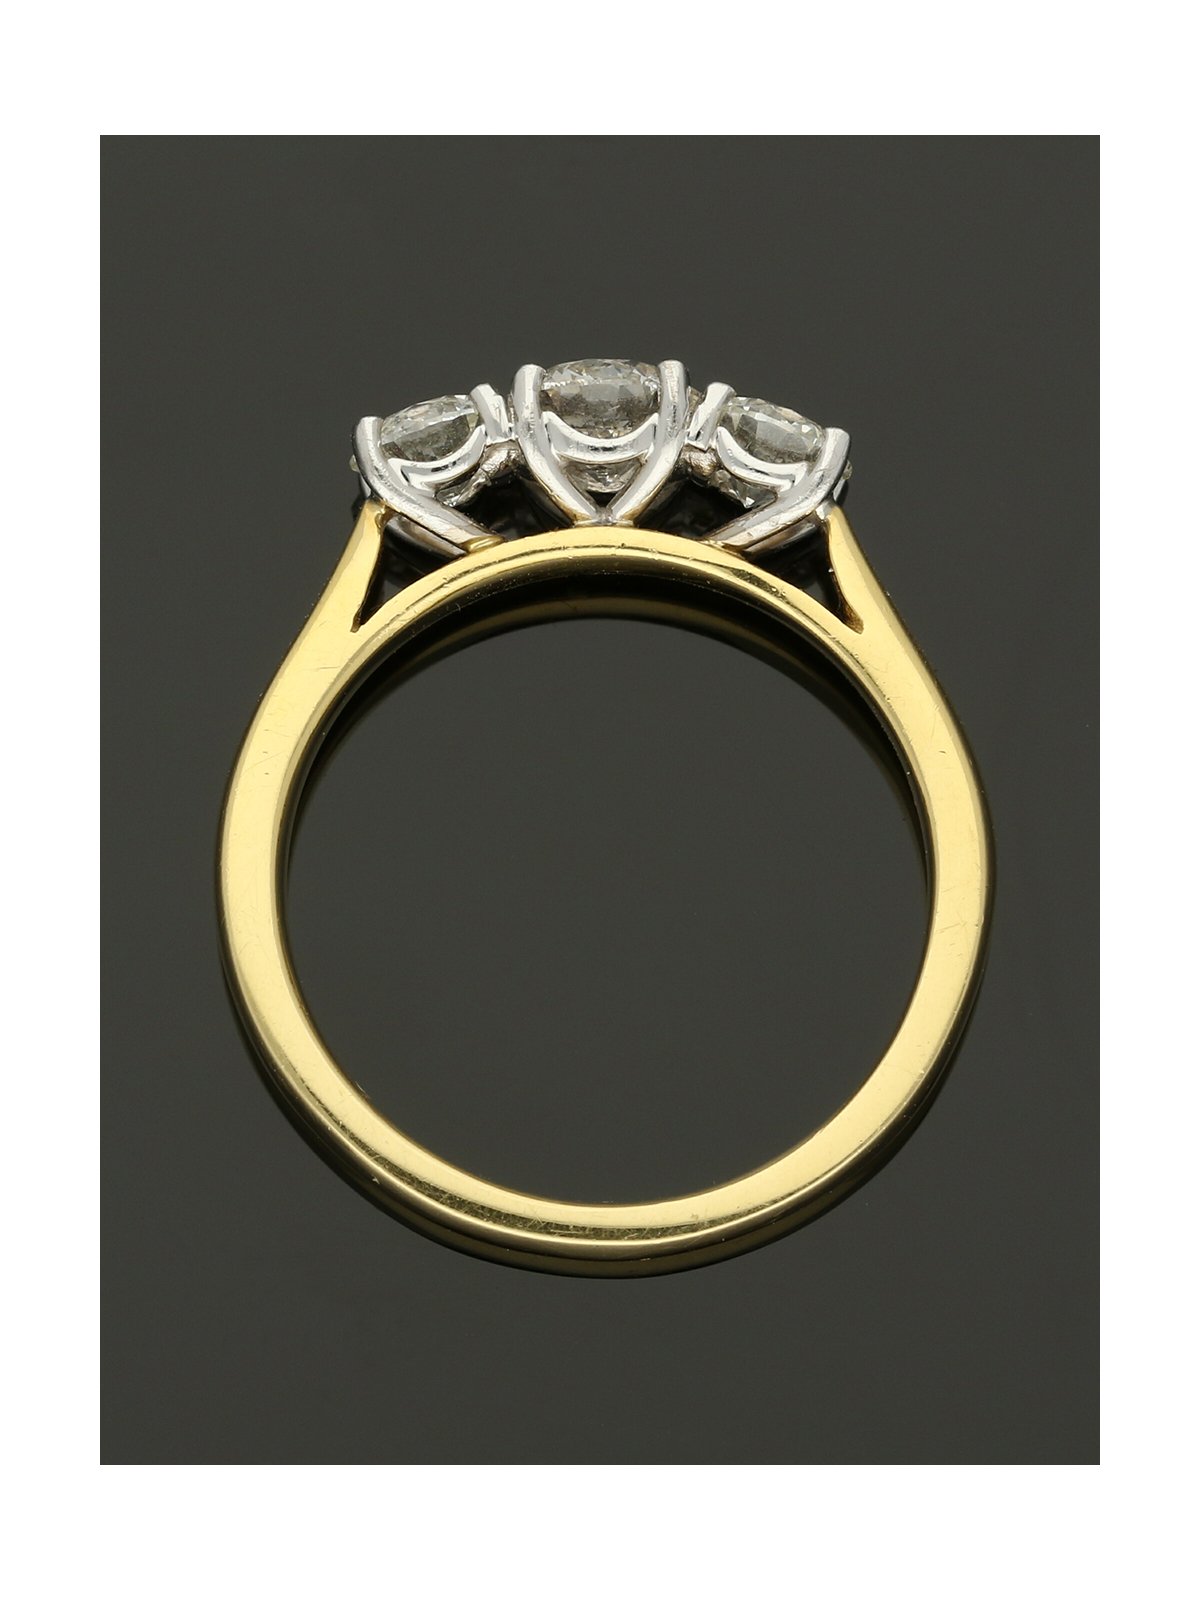 Three Stone Diamond Ring 1.29ct Round Brilliant Cut in 18ct Yellow & White Gold